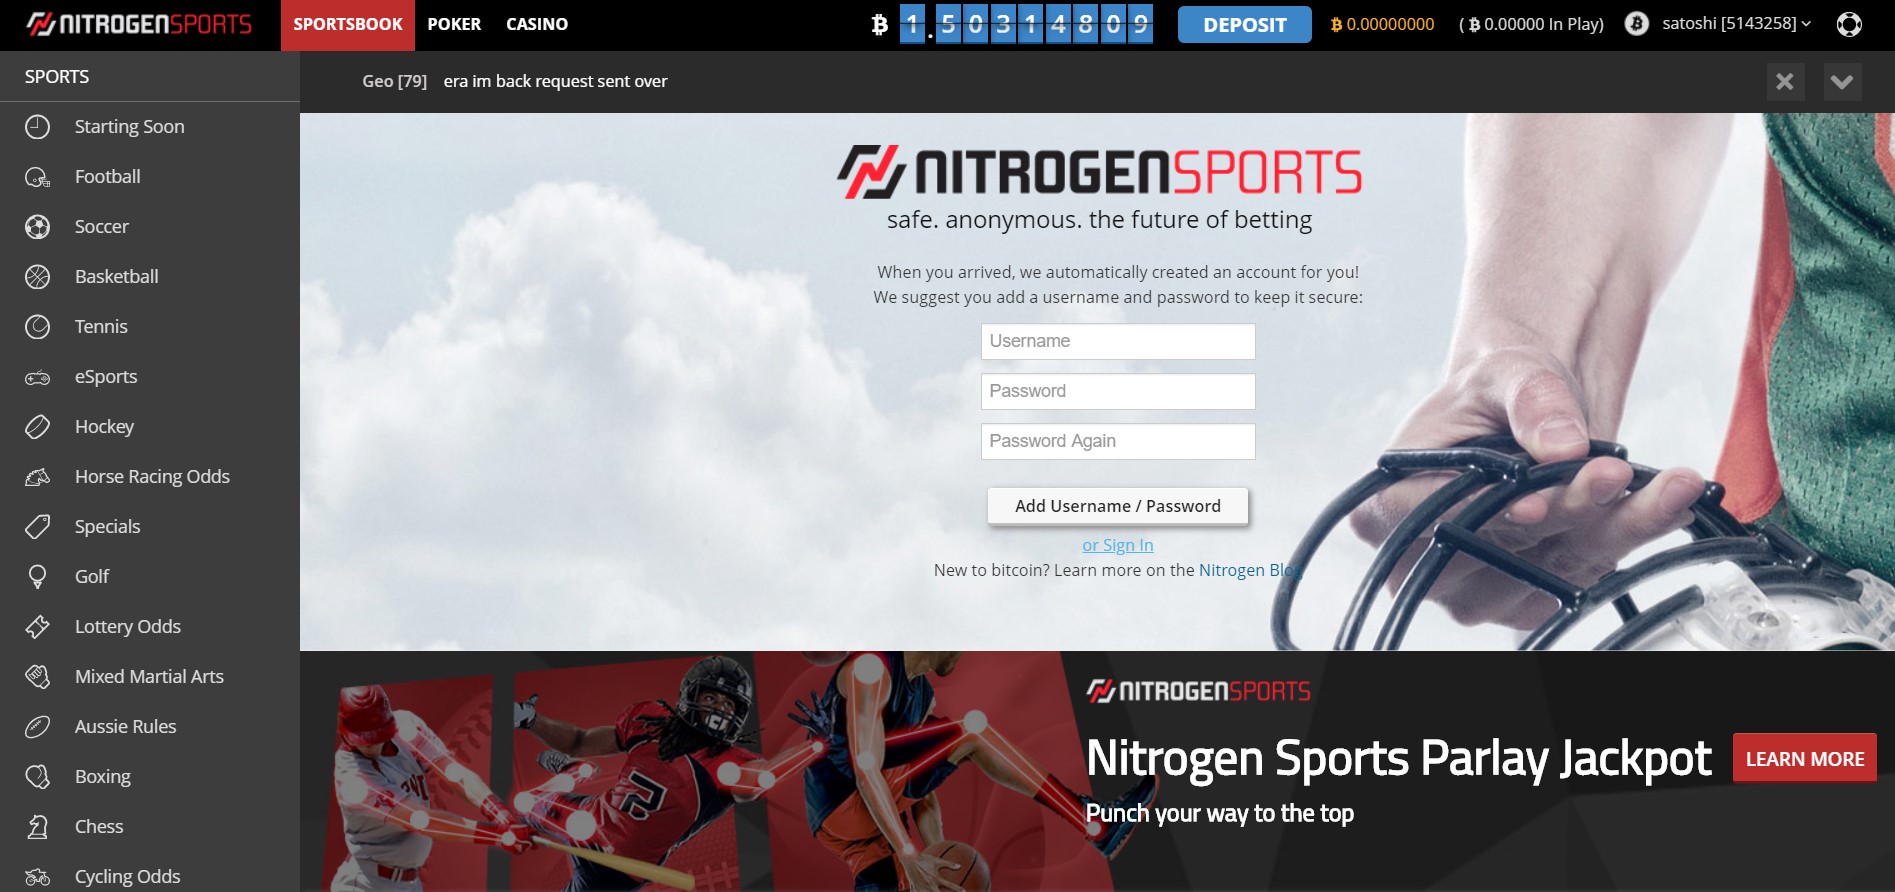 Nitrogen-Sports